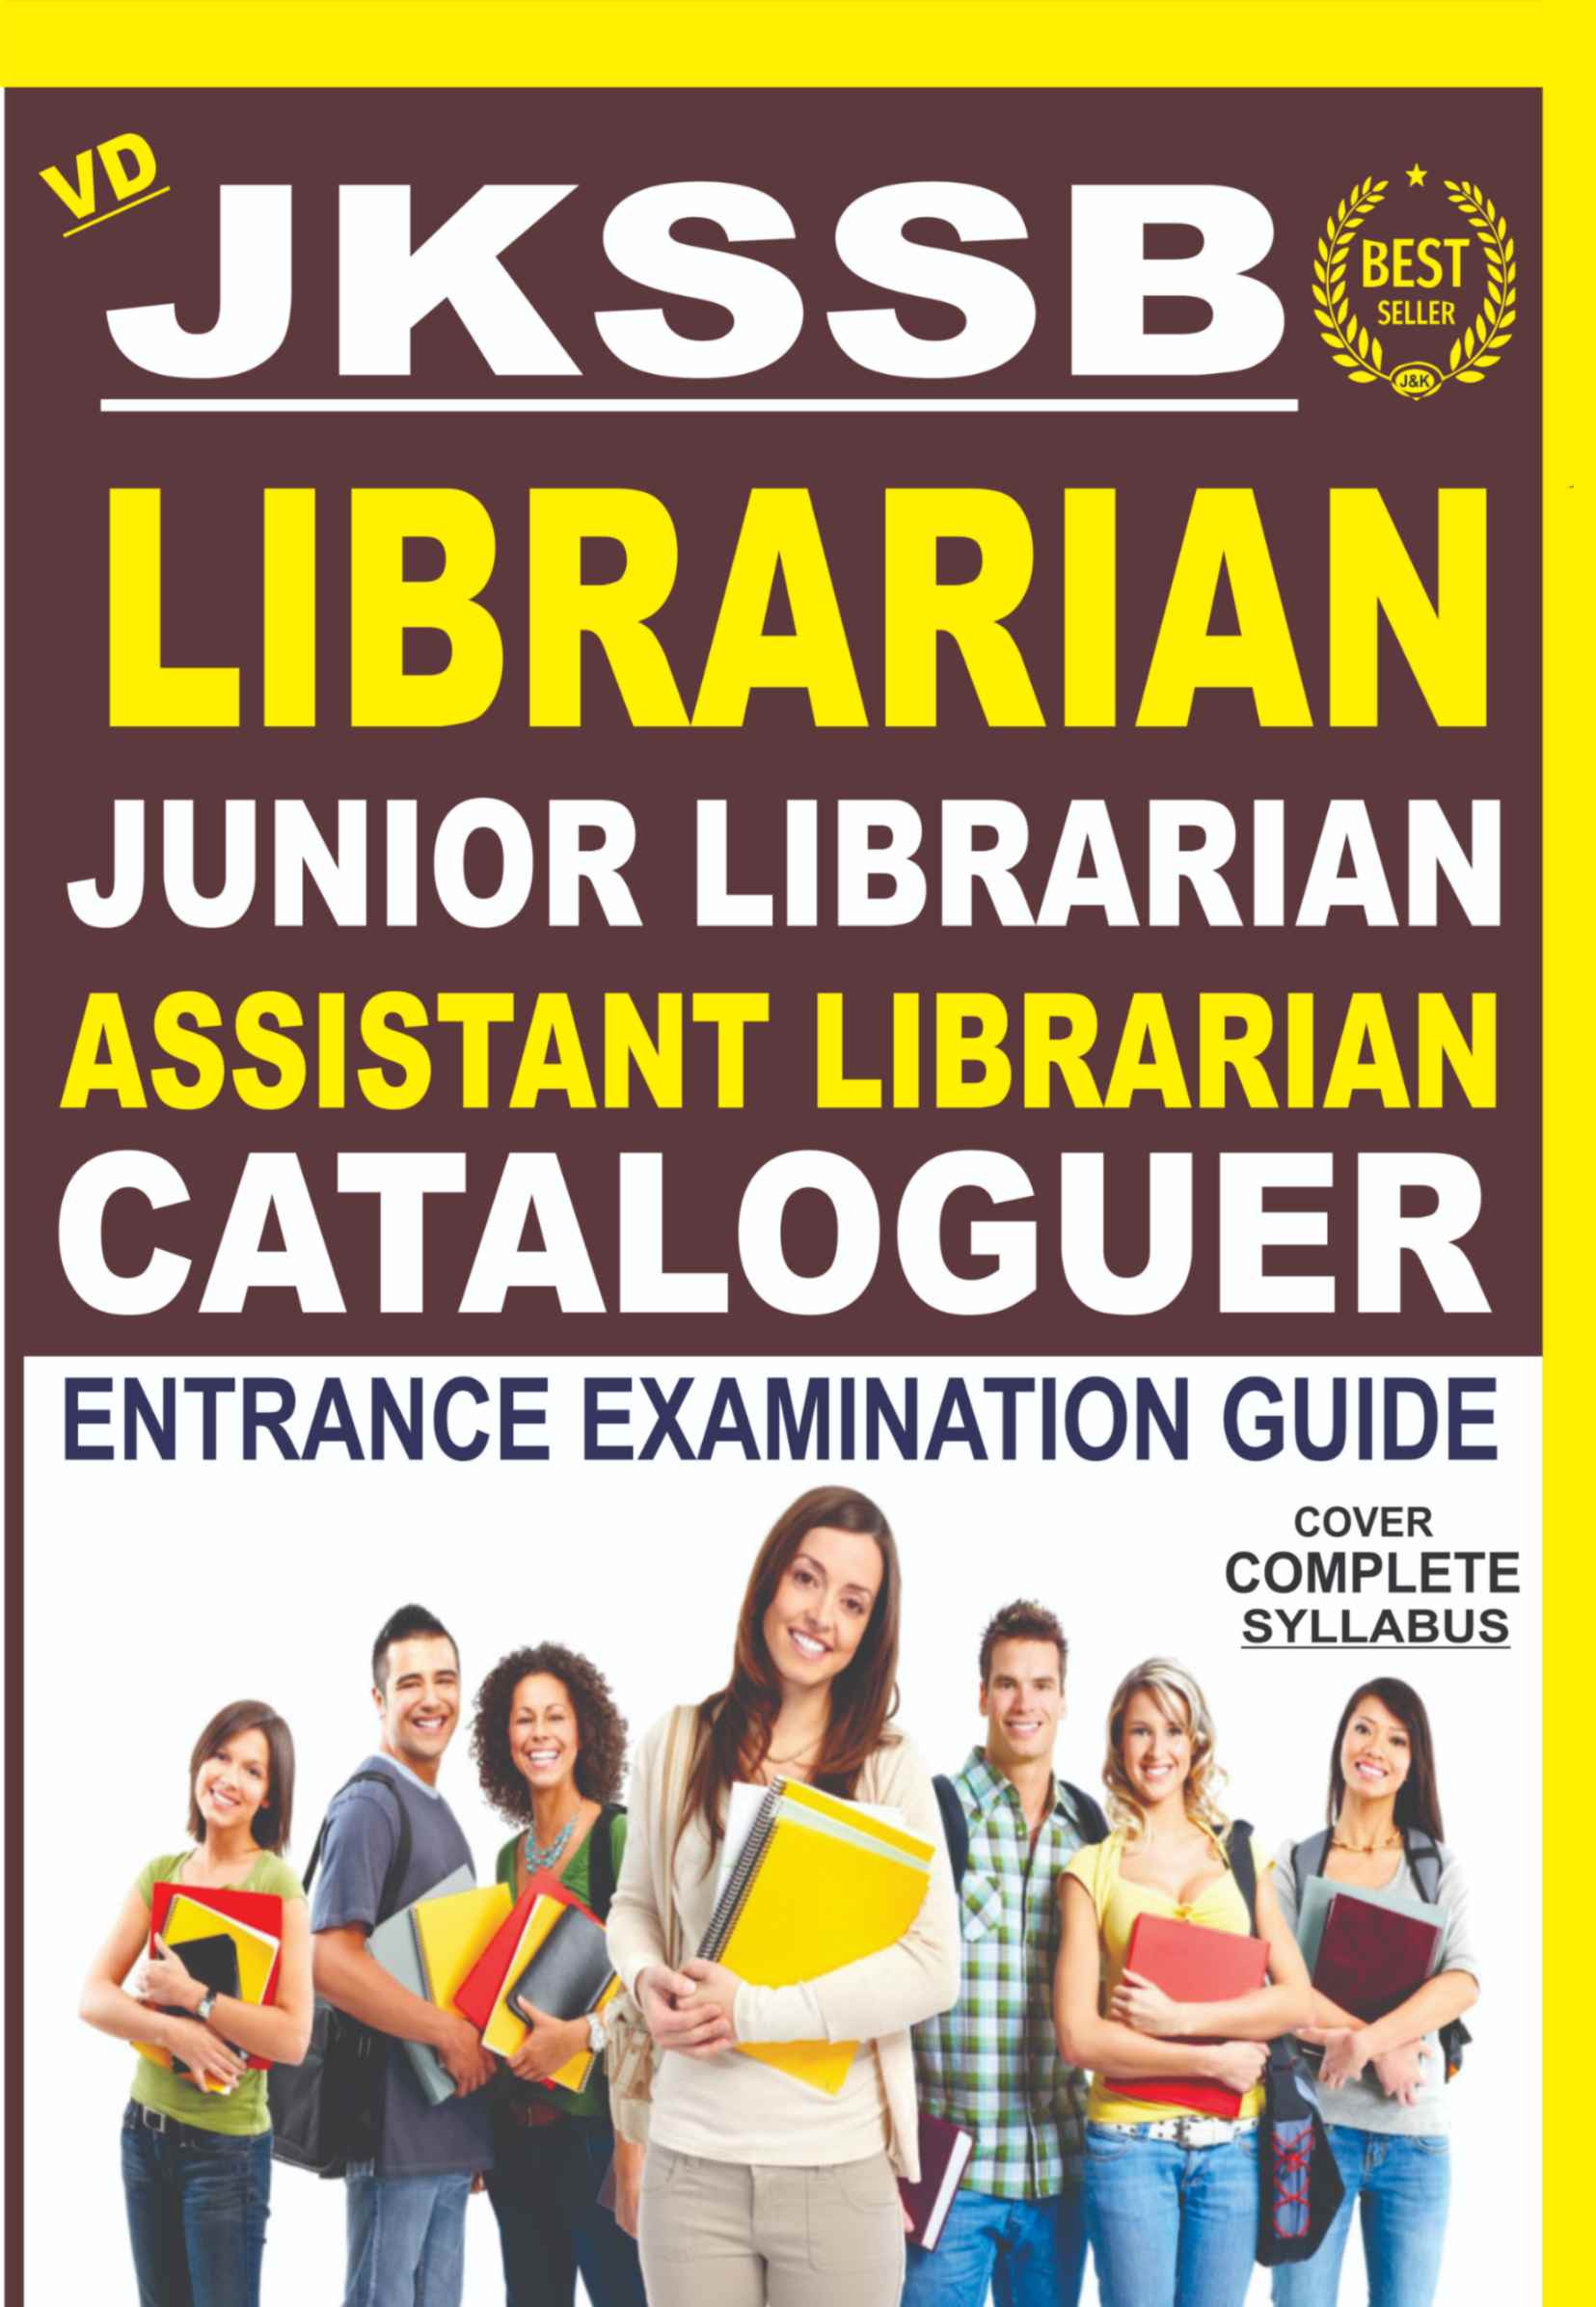 Vinod JKSSB Librarian, Junior Librarian, Assistant Librarian, Cataloguer Book ; VINOD PUBLICATIONS ; CALL 9218219218